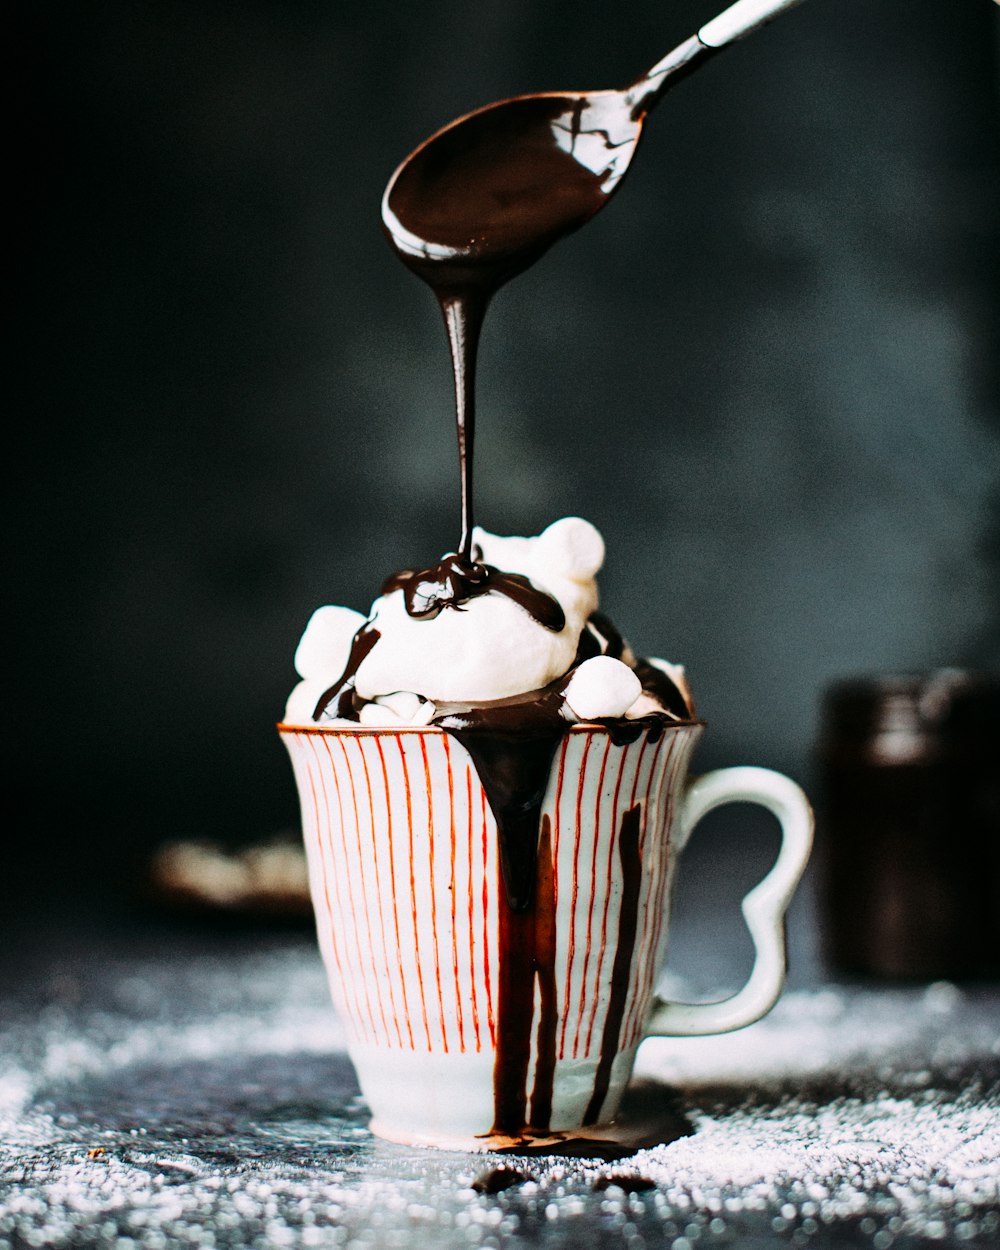 Schokoladenguss auf Vanilleeis im Keramikbecher